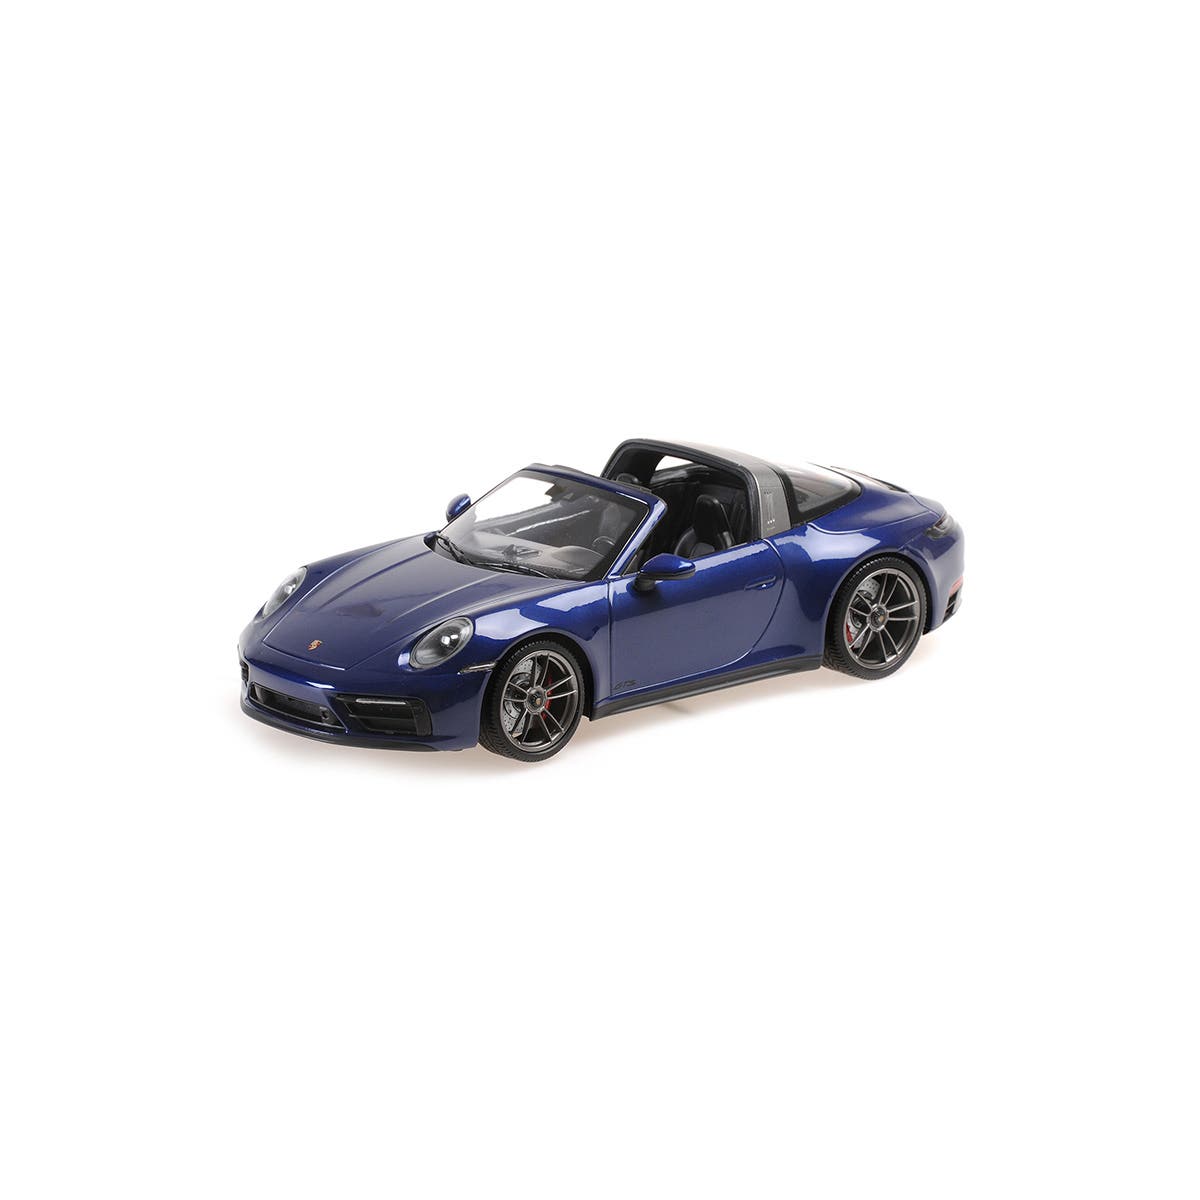 PORSCHE 911 (992) TARGA 4 GTS - 2021 - BLUE METALLIC - 1:18 Scale Diecast Model Car